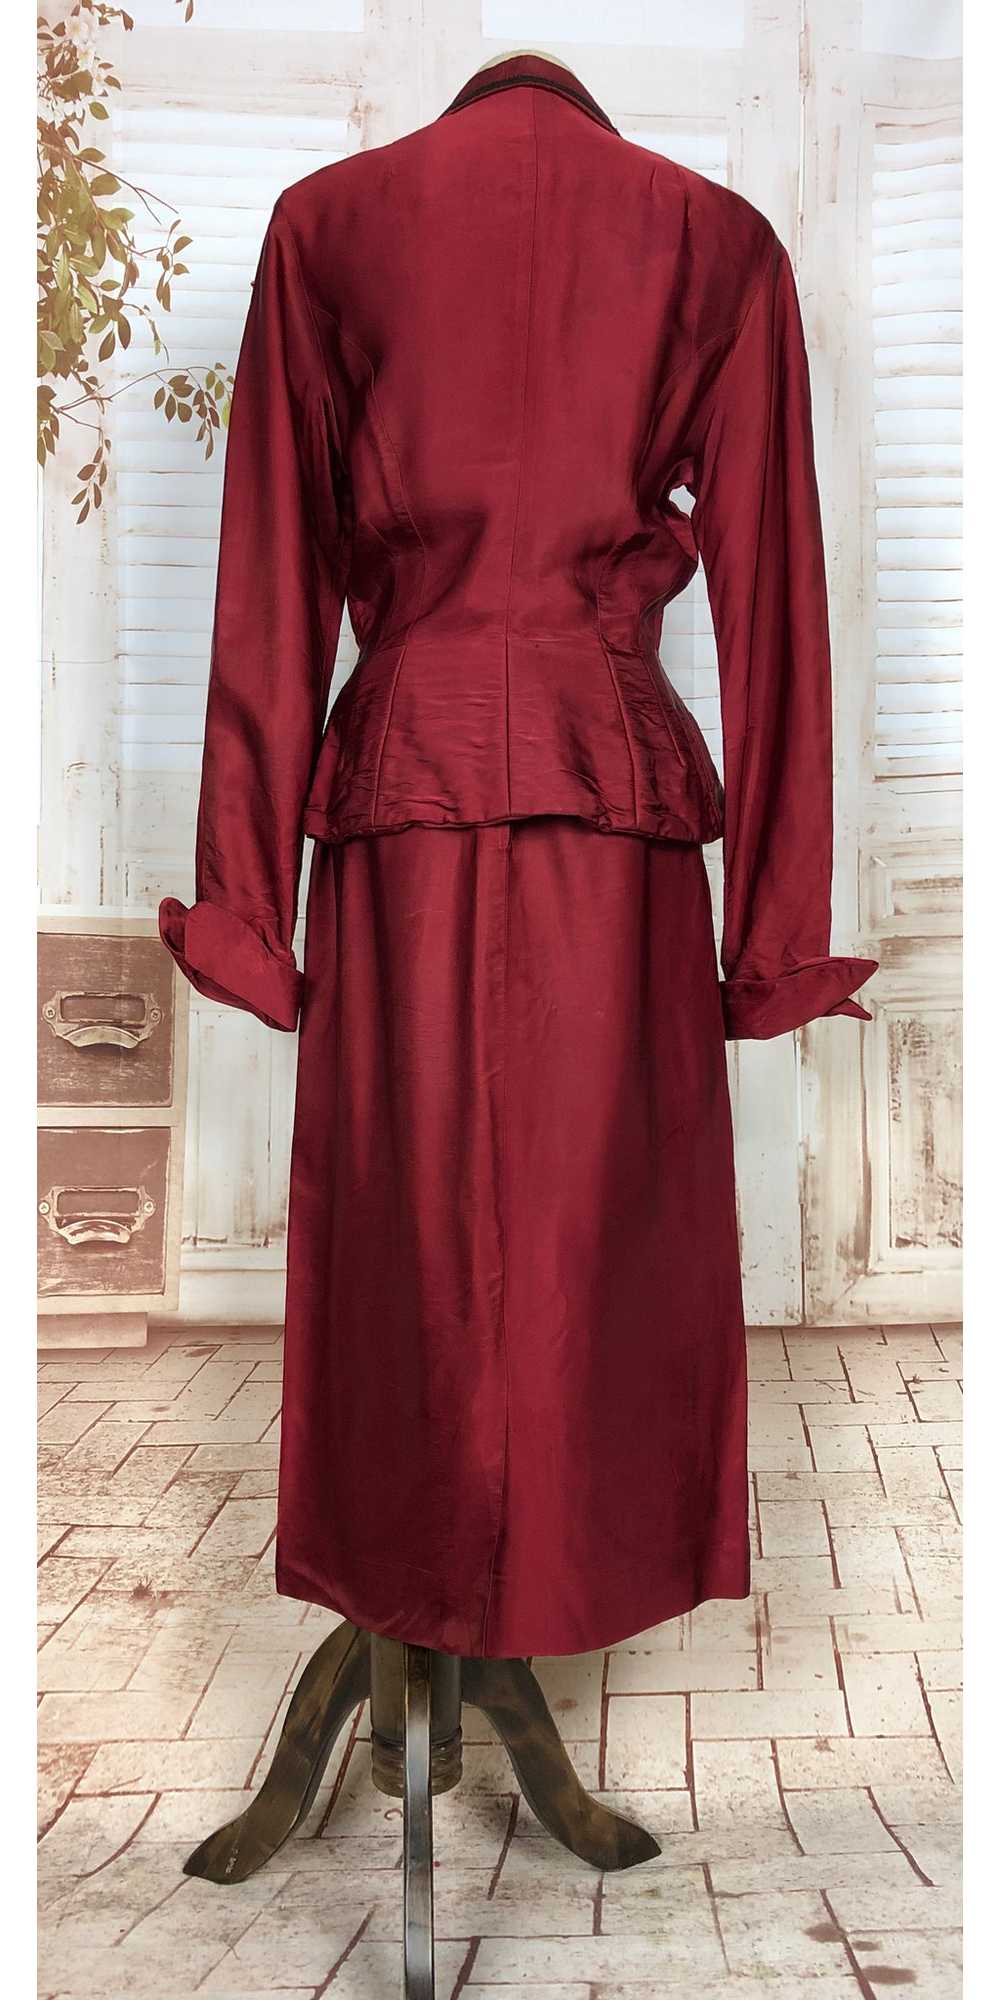 Exquisite Original 1940s Vintage Red And Black Fe… - image 8